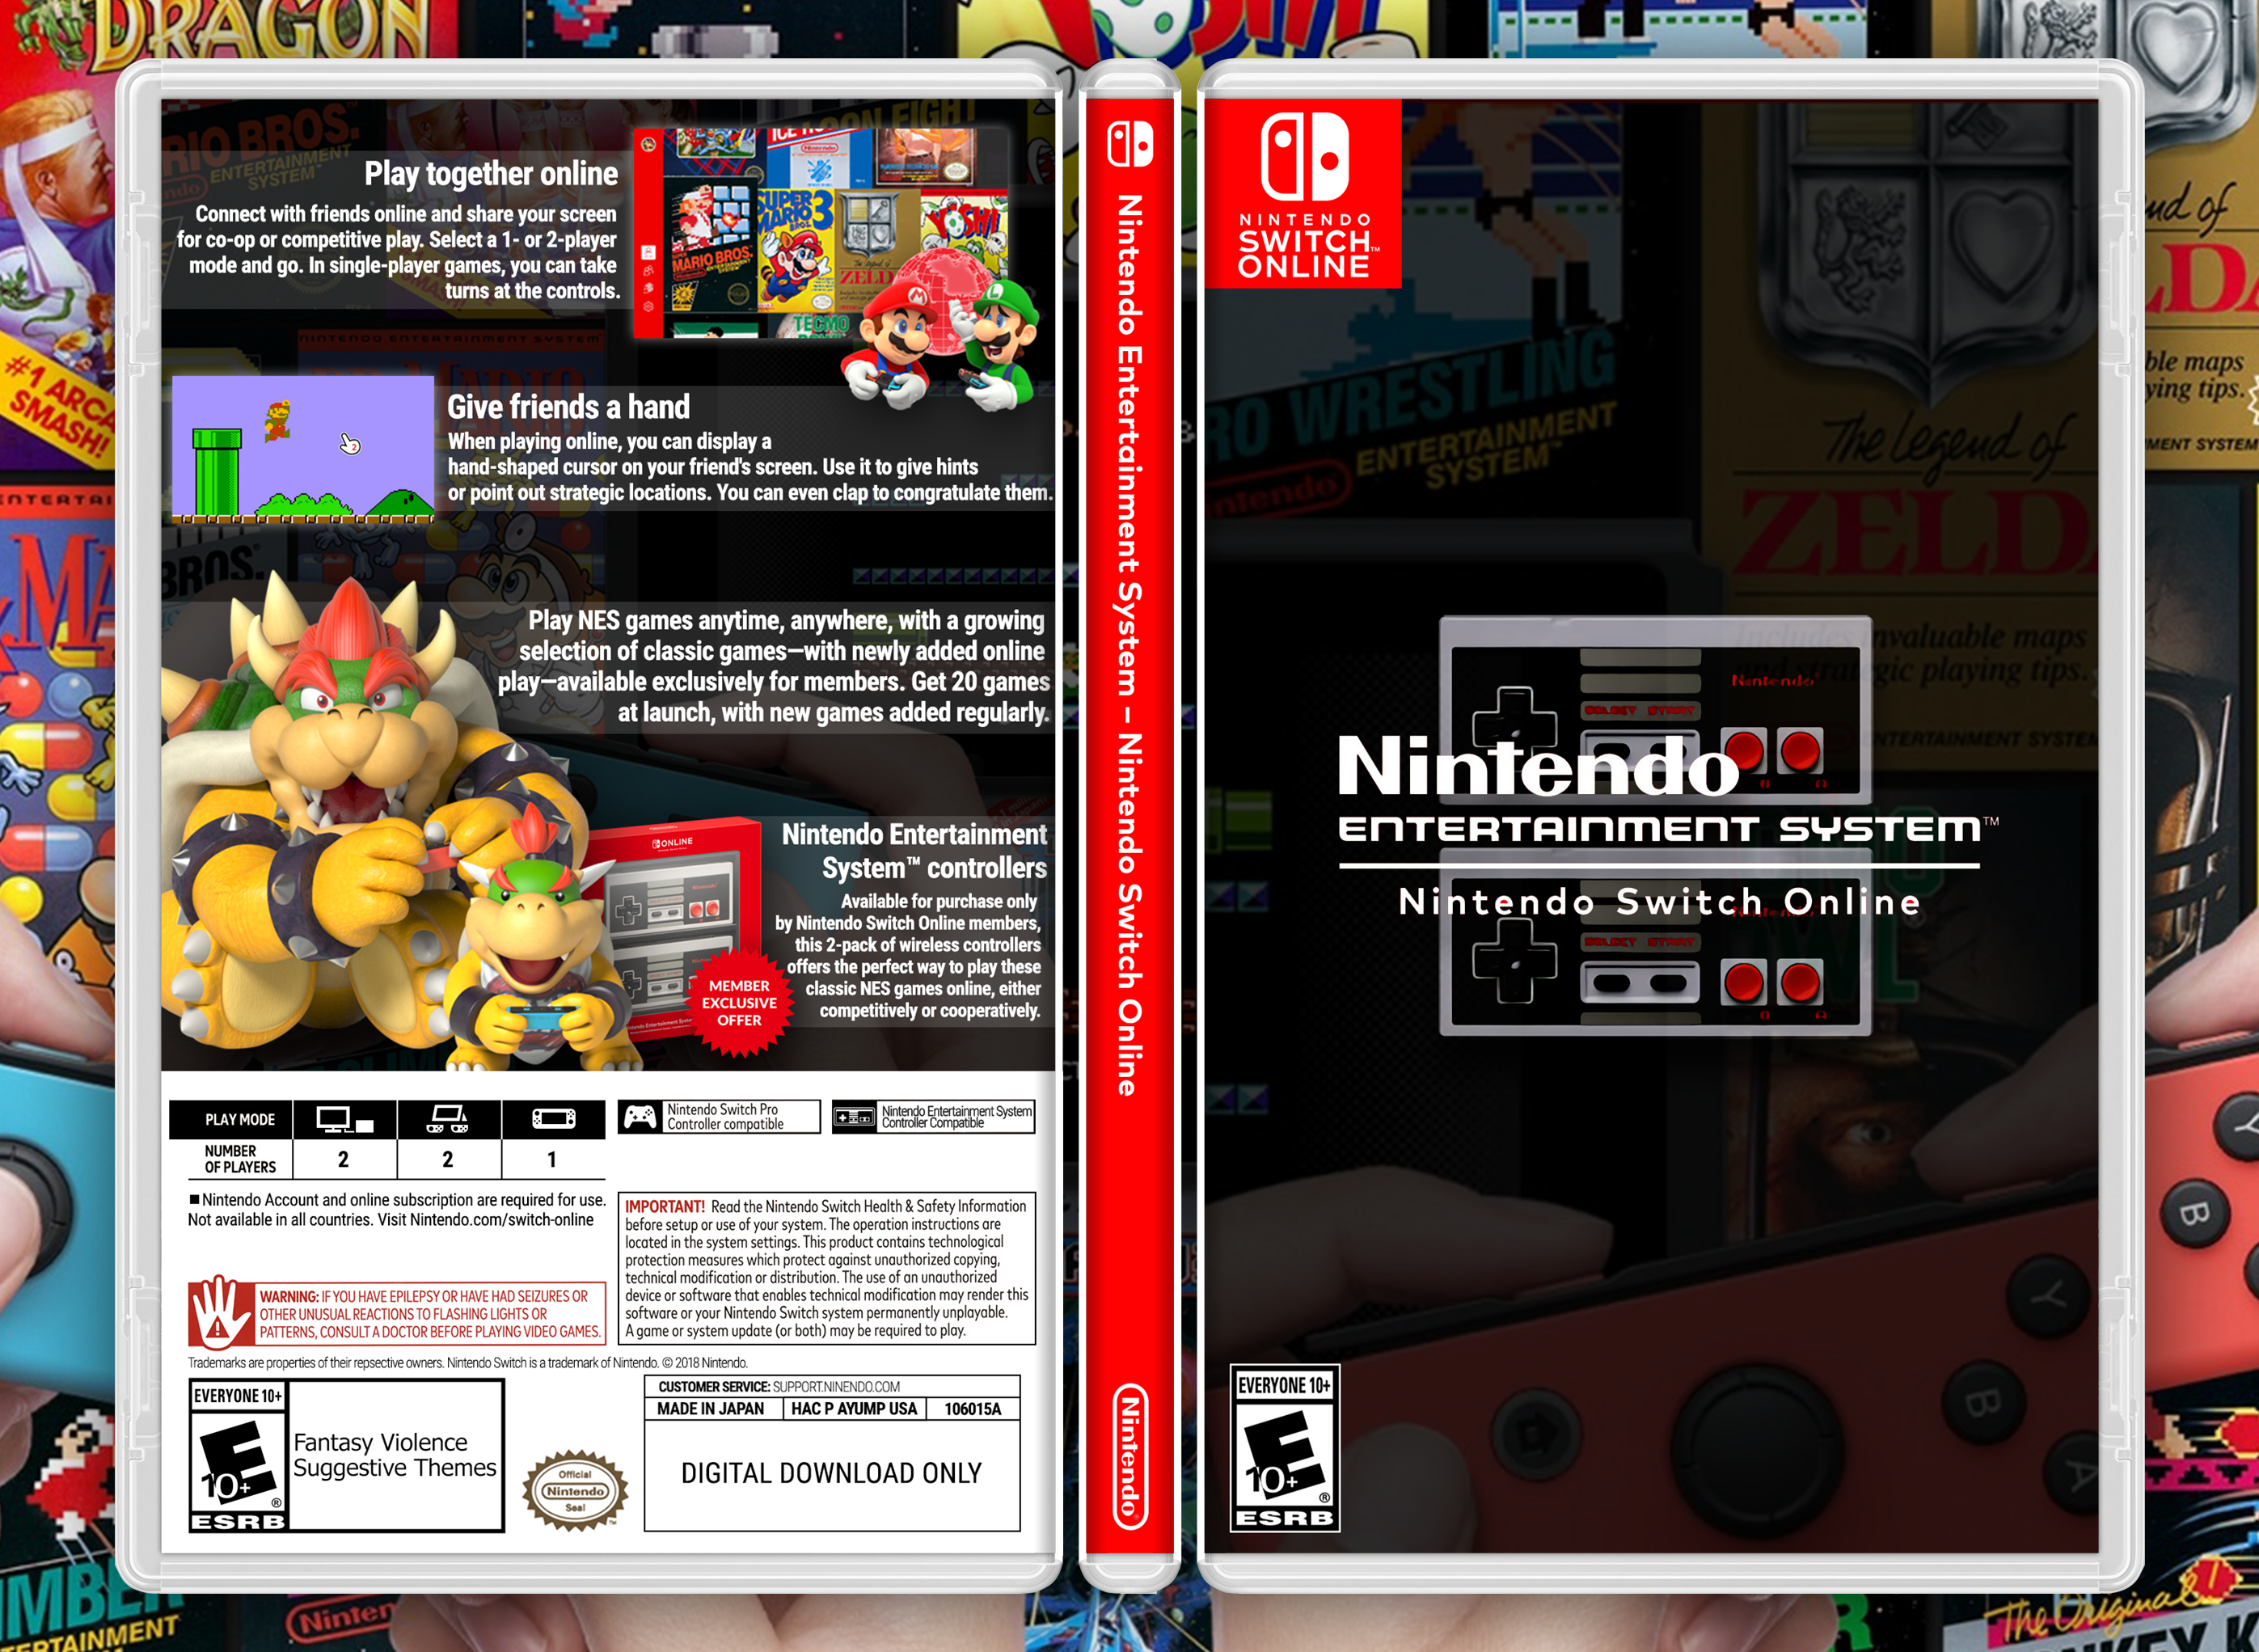 Nintendo Entertainment System - Online box cover